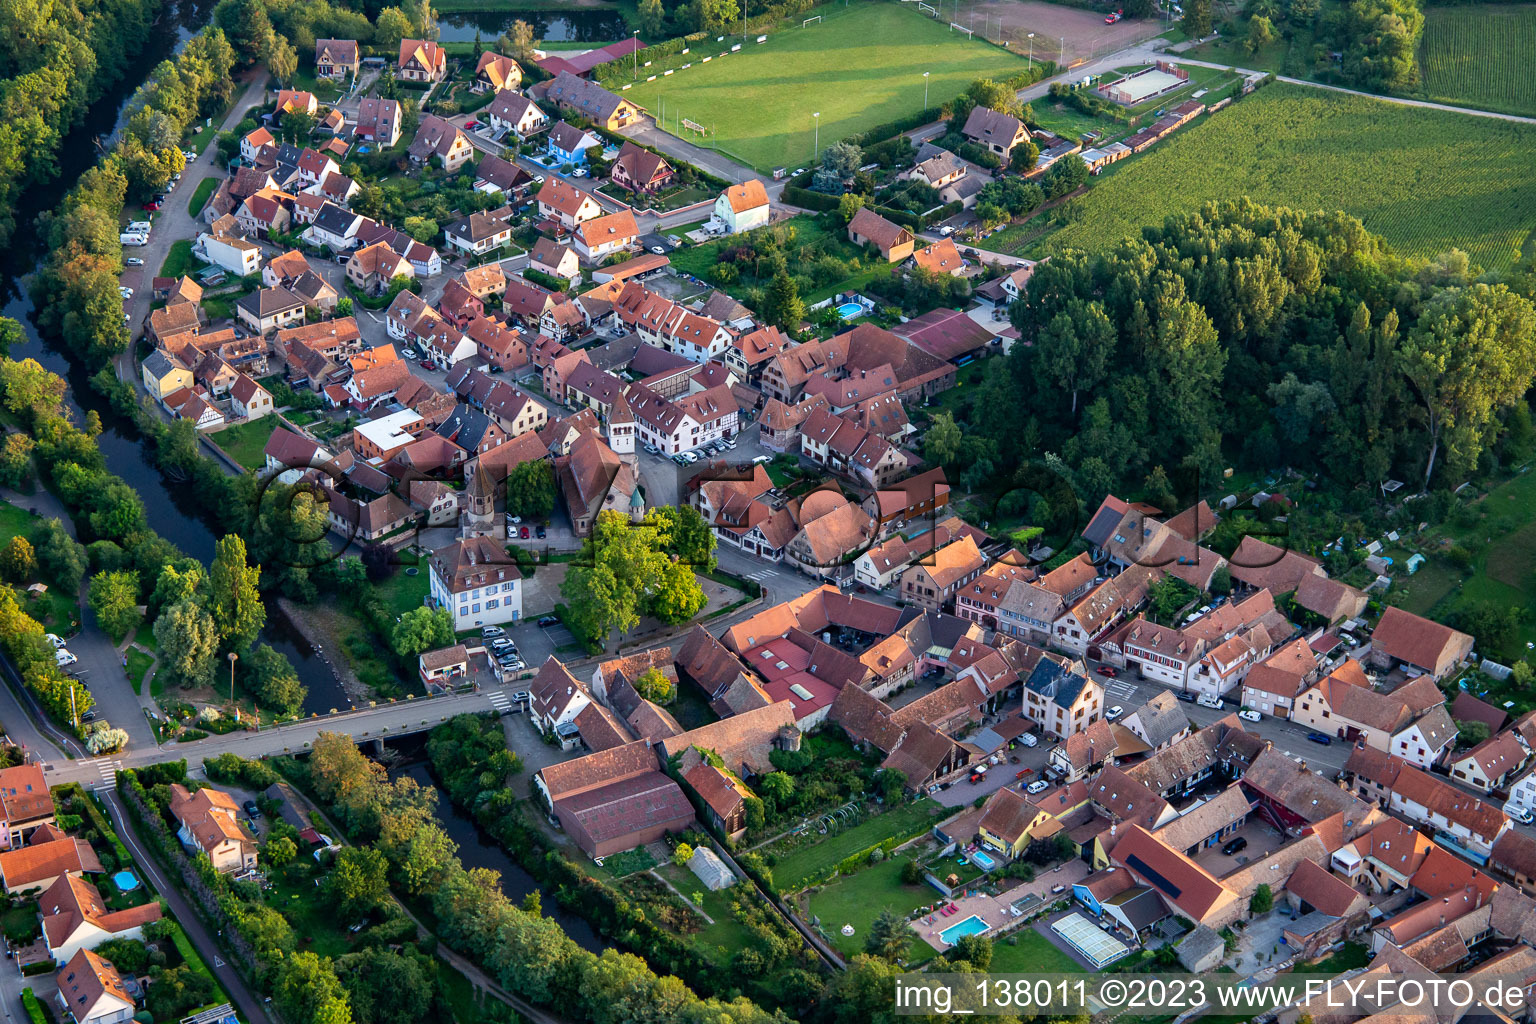 Aerial view of Parc Audeou in Avolsheim in the state Bas-Rhin, France